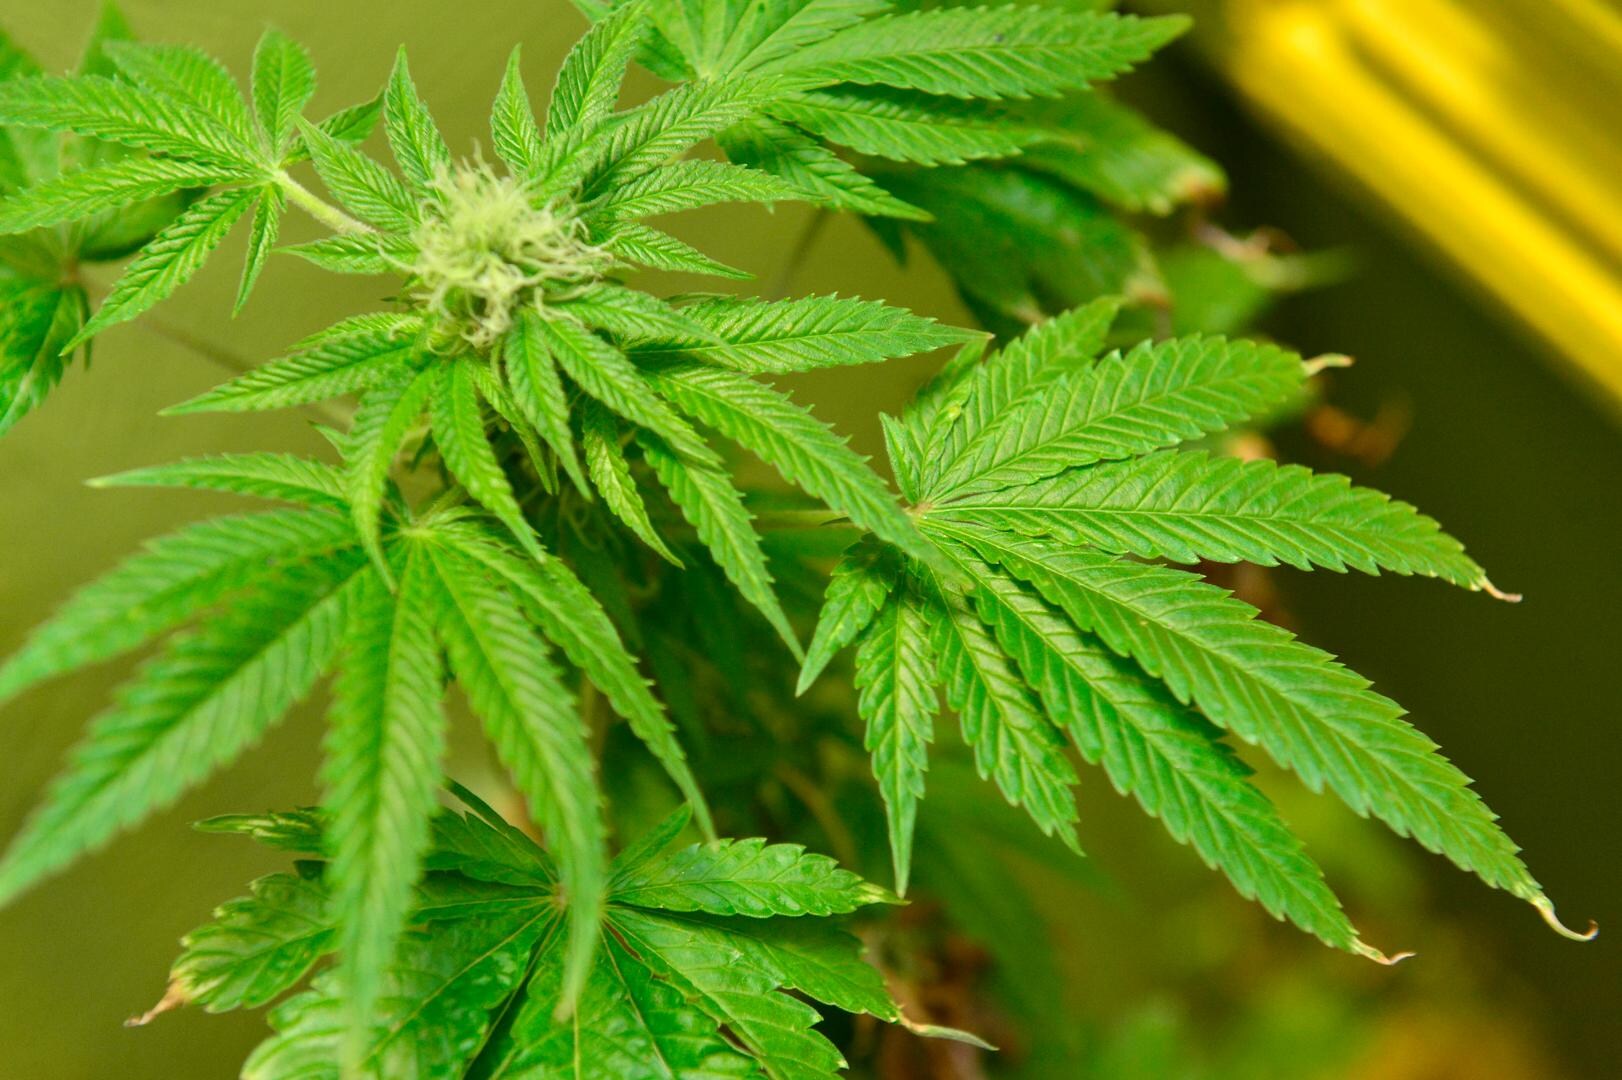 Cannabisplantage met 570 planten ontmanteld in Berchem, drie verdachten opgepakt